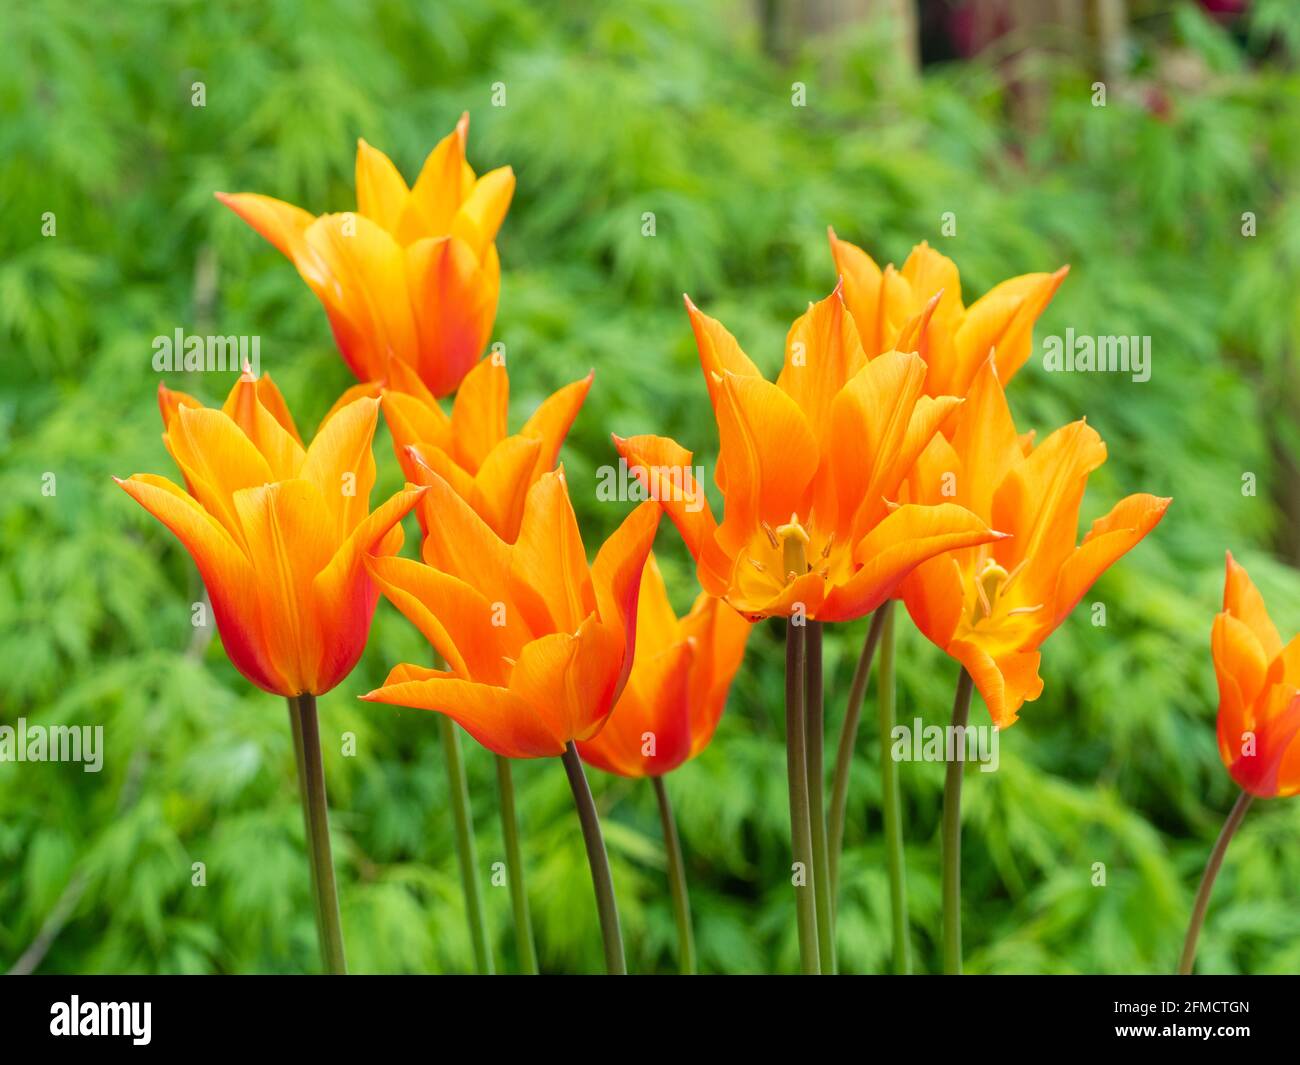 Flores de color naranja del tulipán florido de flor de nenúfar, Tulipa 'Ballerina Foto de stock